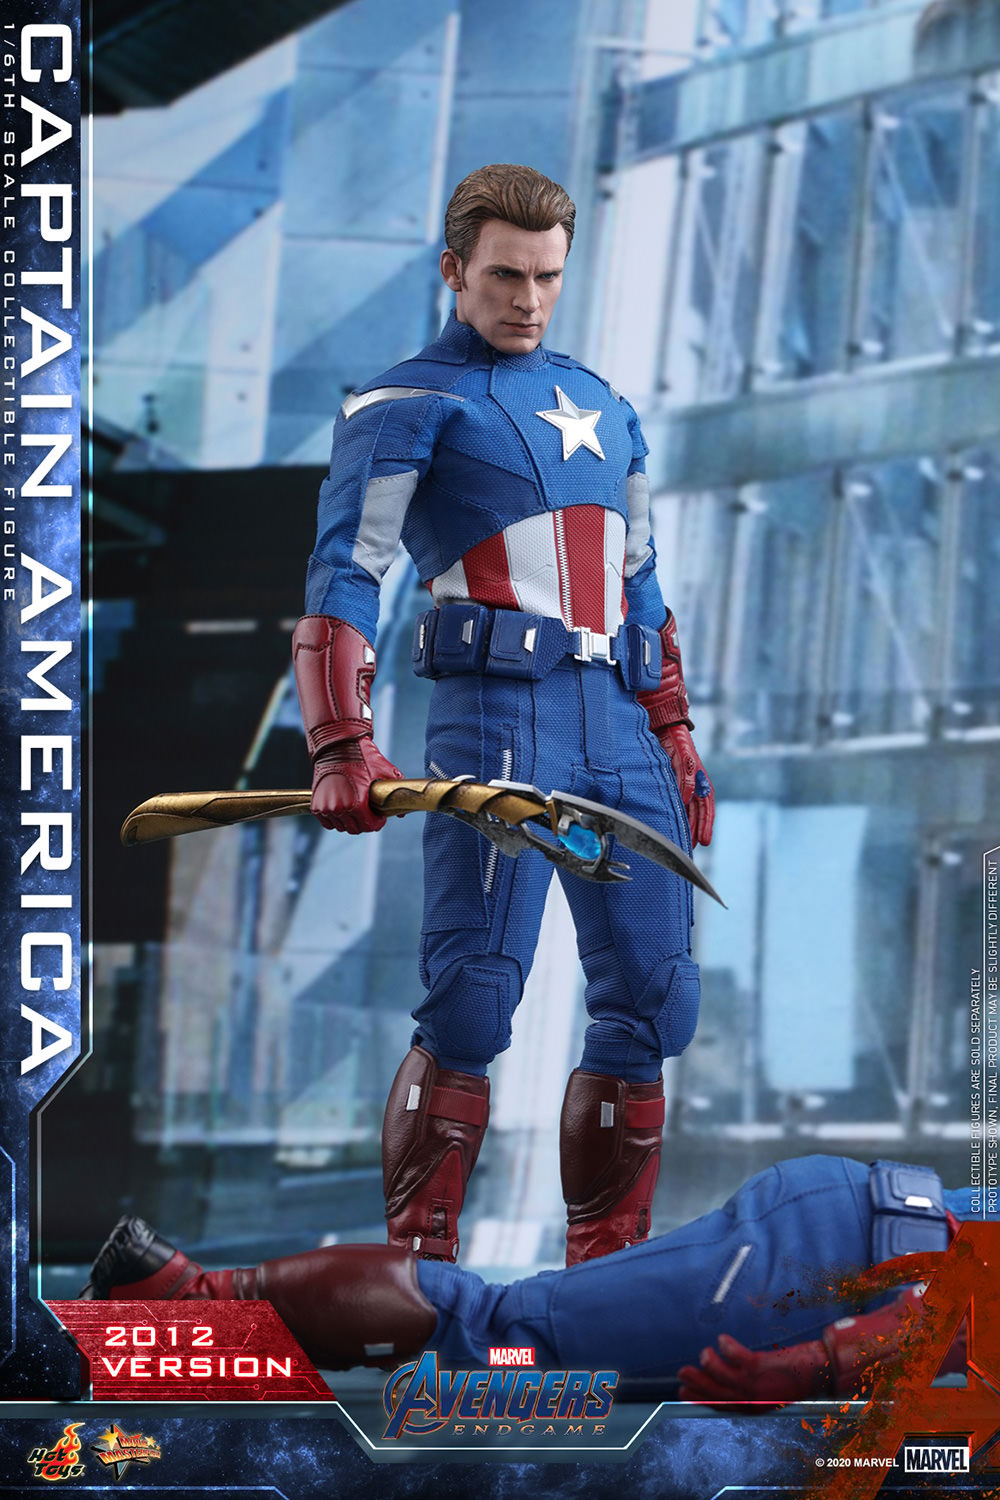 Captain America (2012 Version)